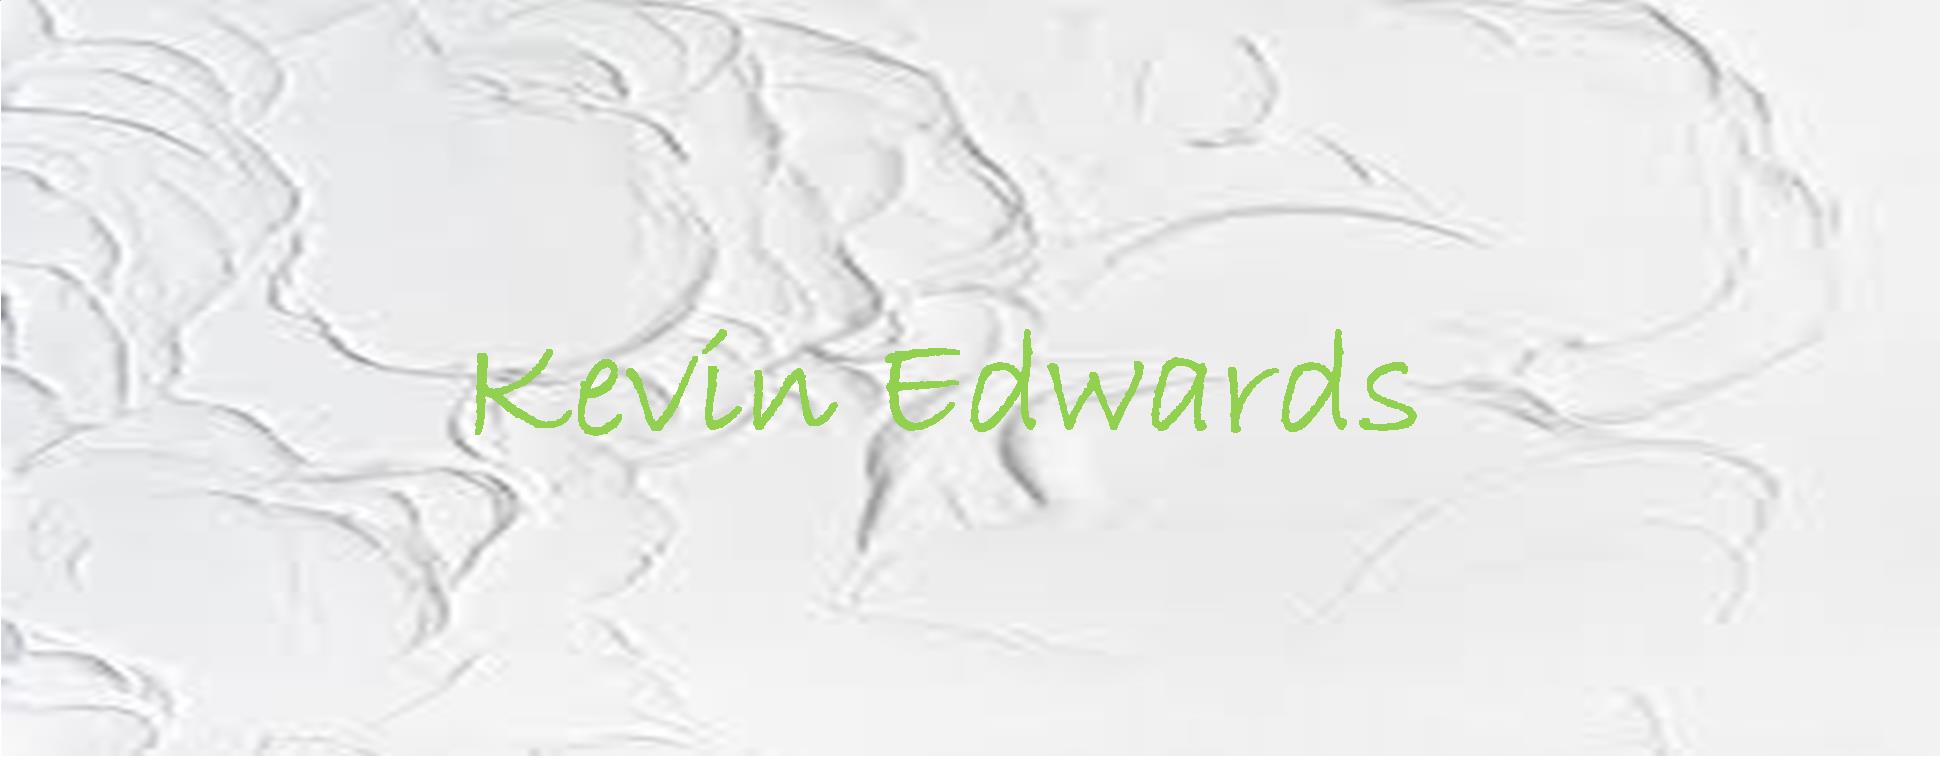 Kevin Edwards.jpg